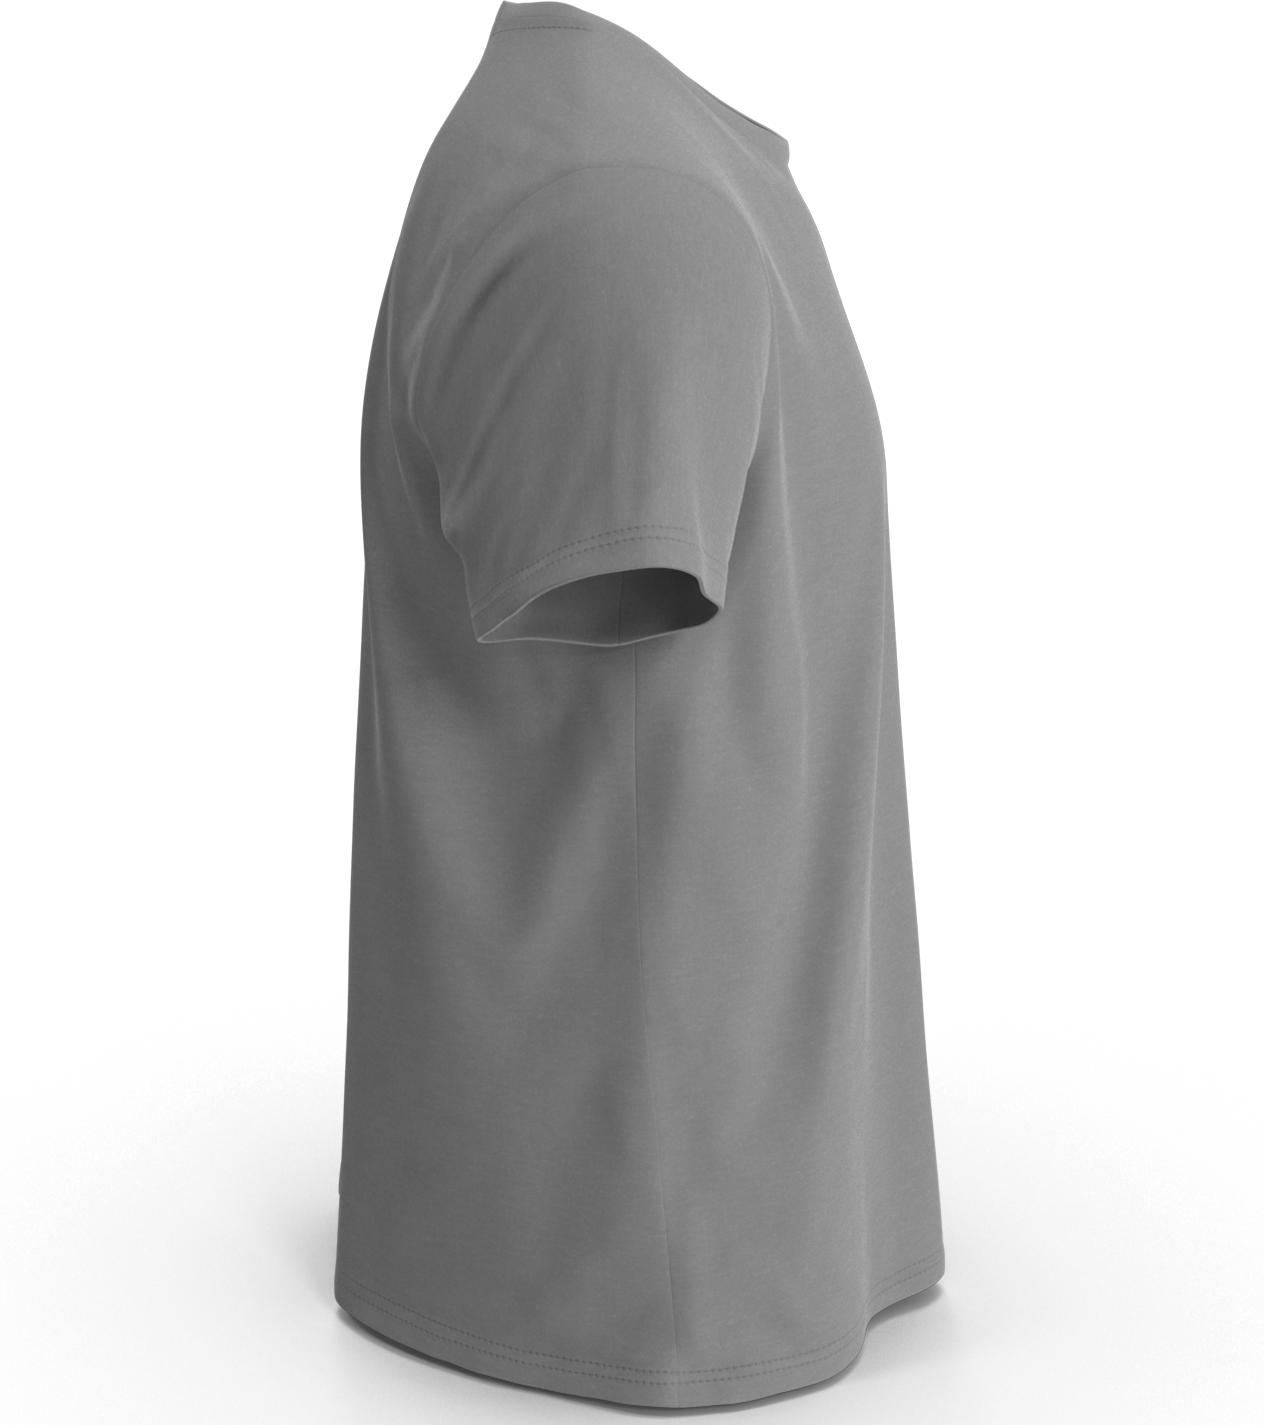 Grey 100% Soft Cotton Women's T-shirts